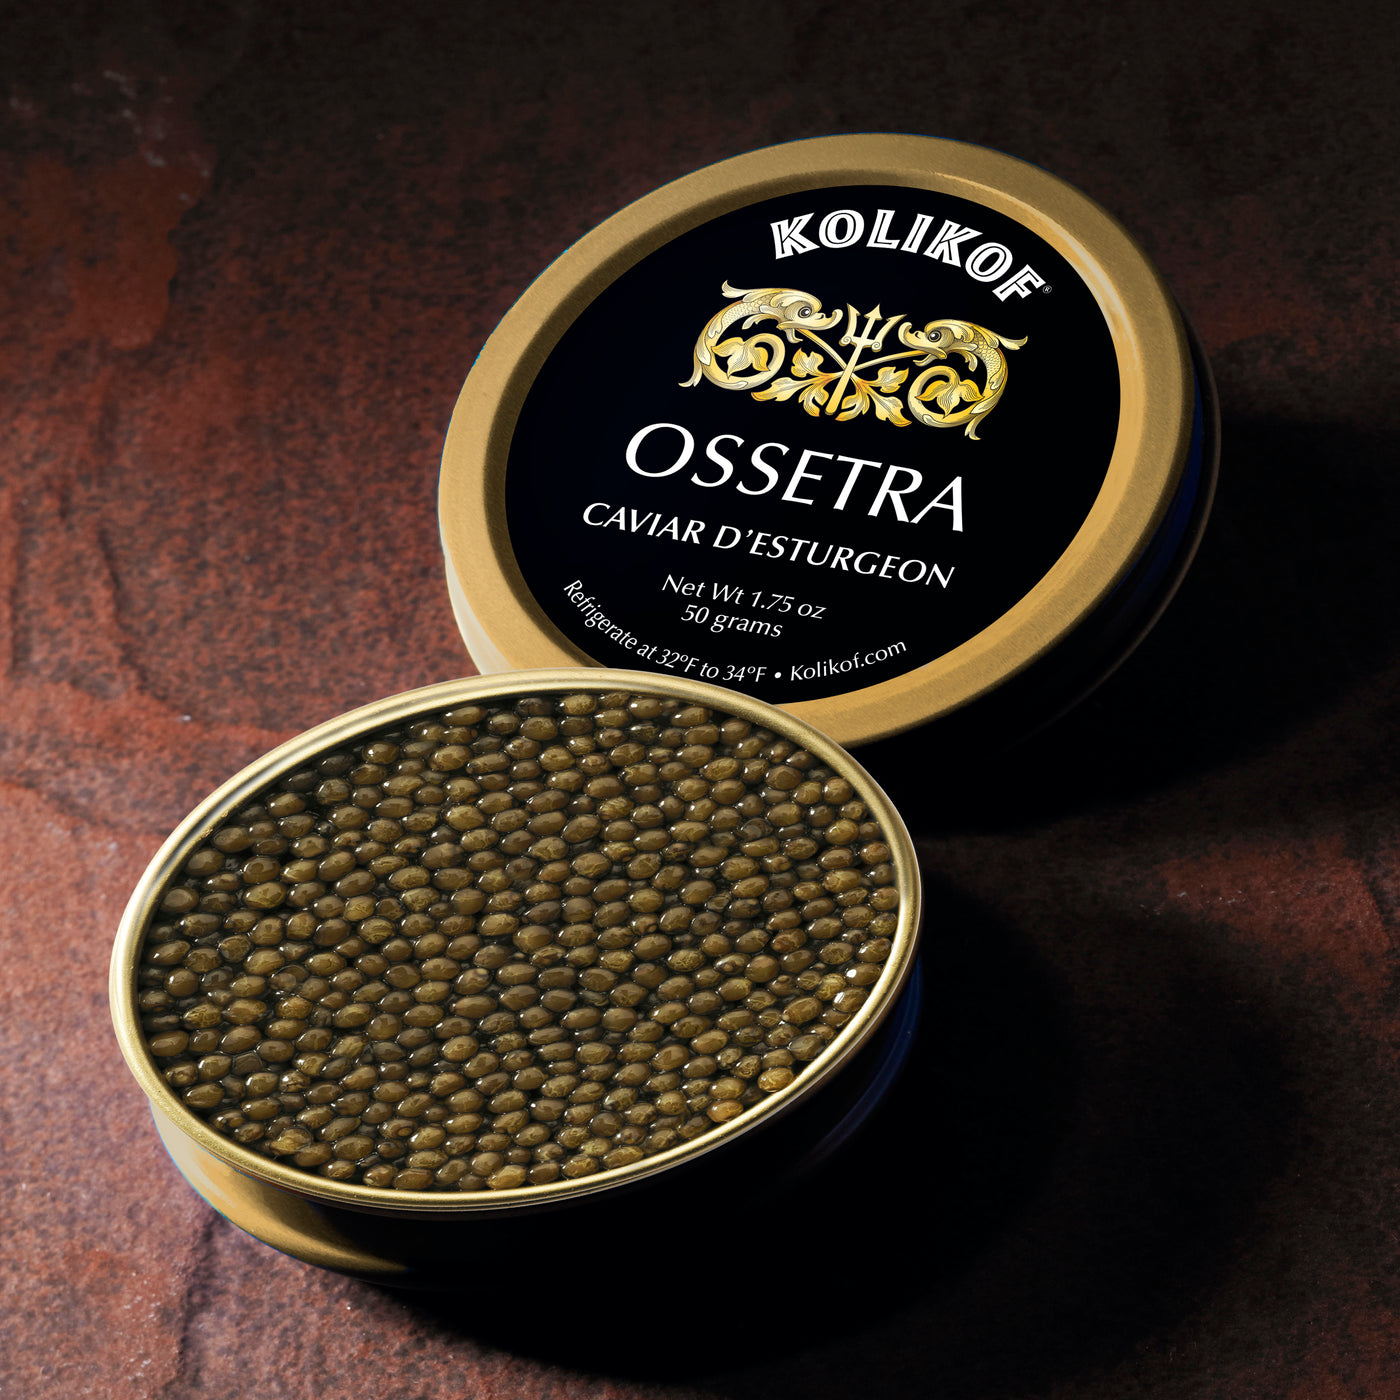 Sturgeon Caviar Gift Set